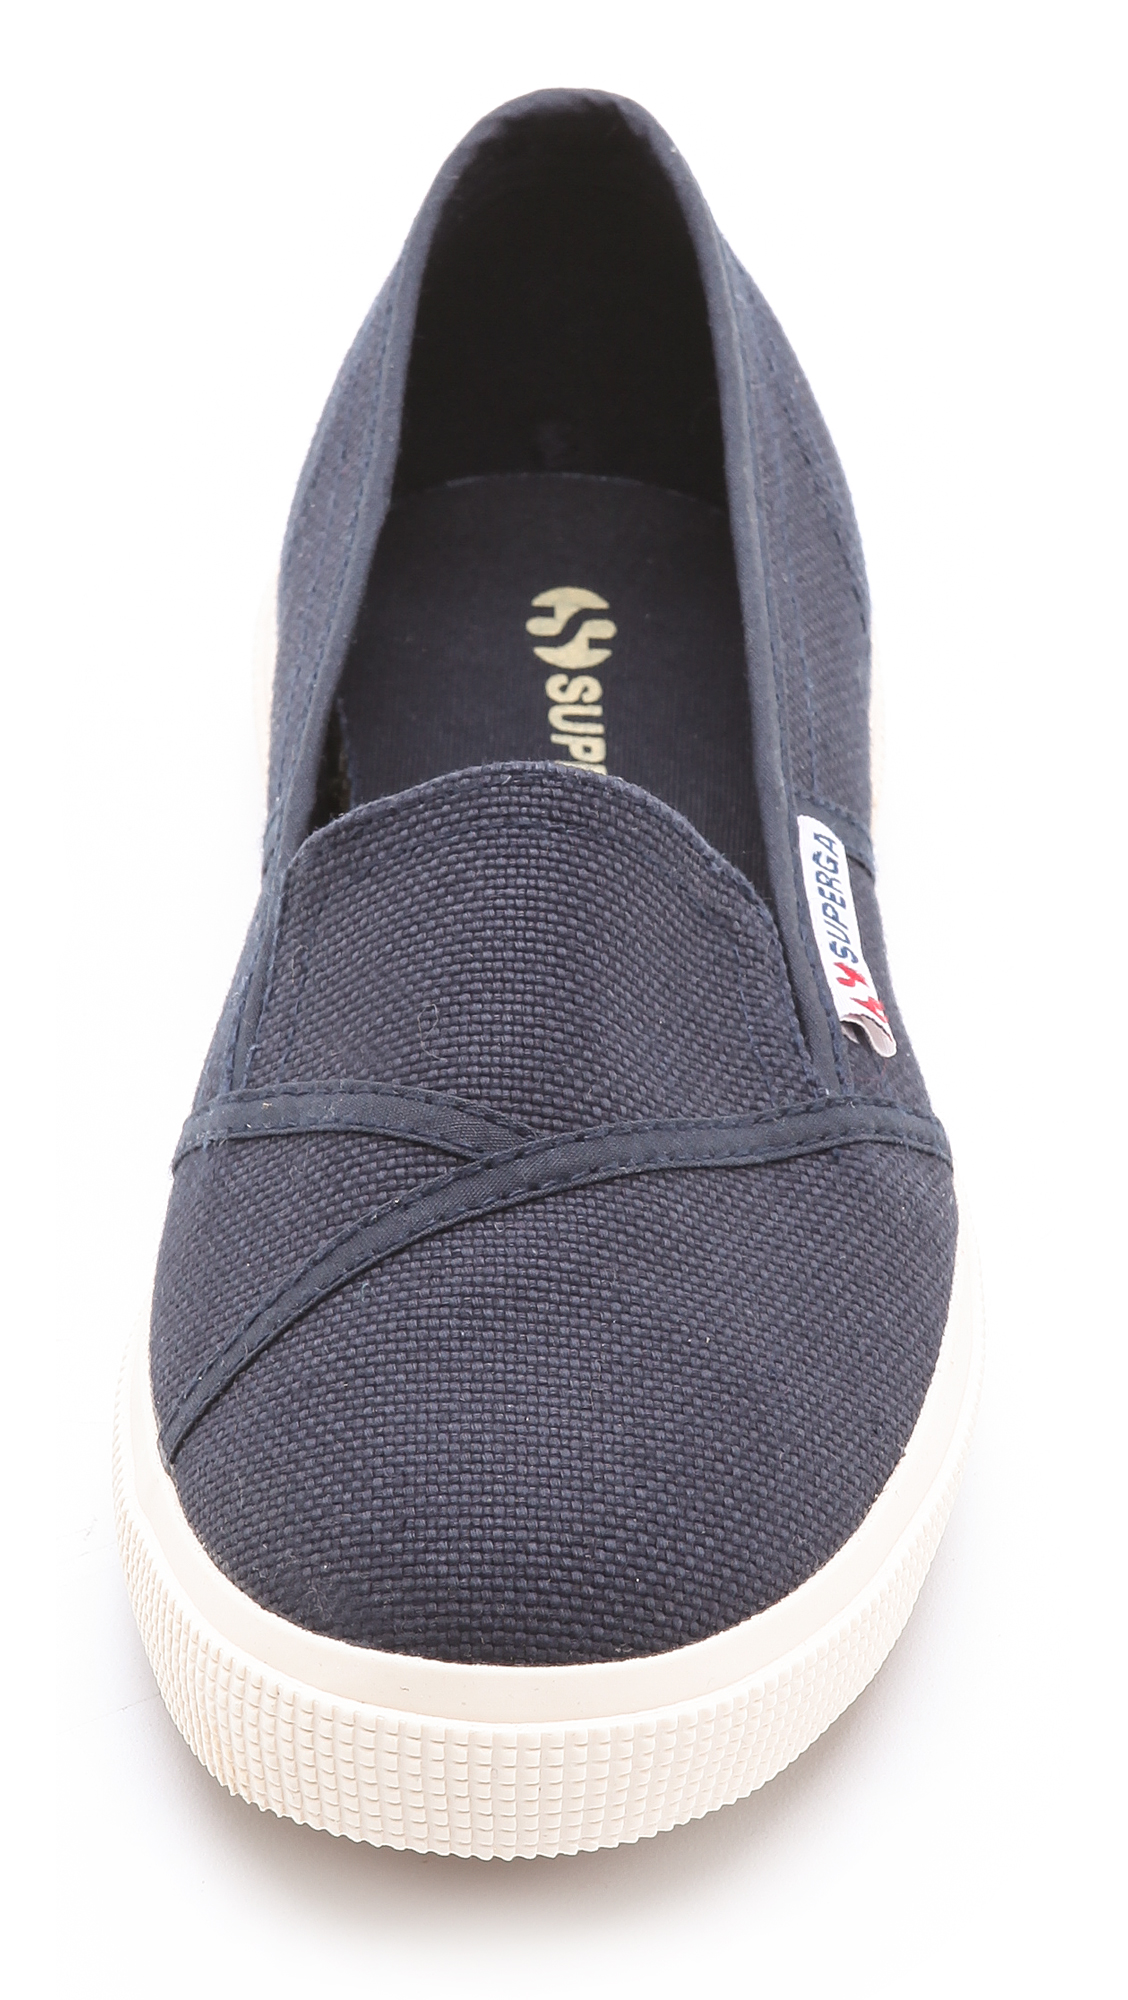 Superga Slip On Sneakers - Mushroom in Navy (Blue) - Lyst